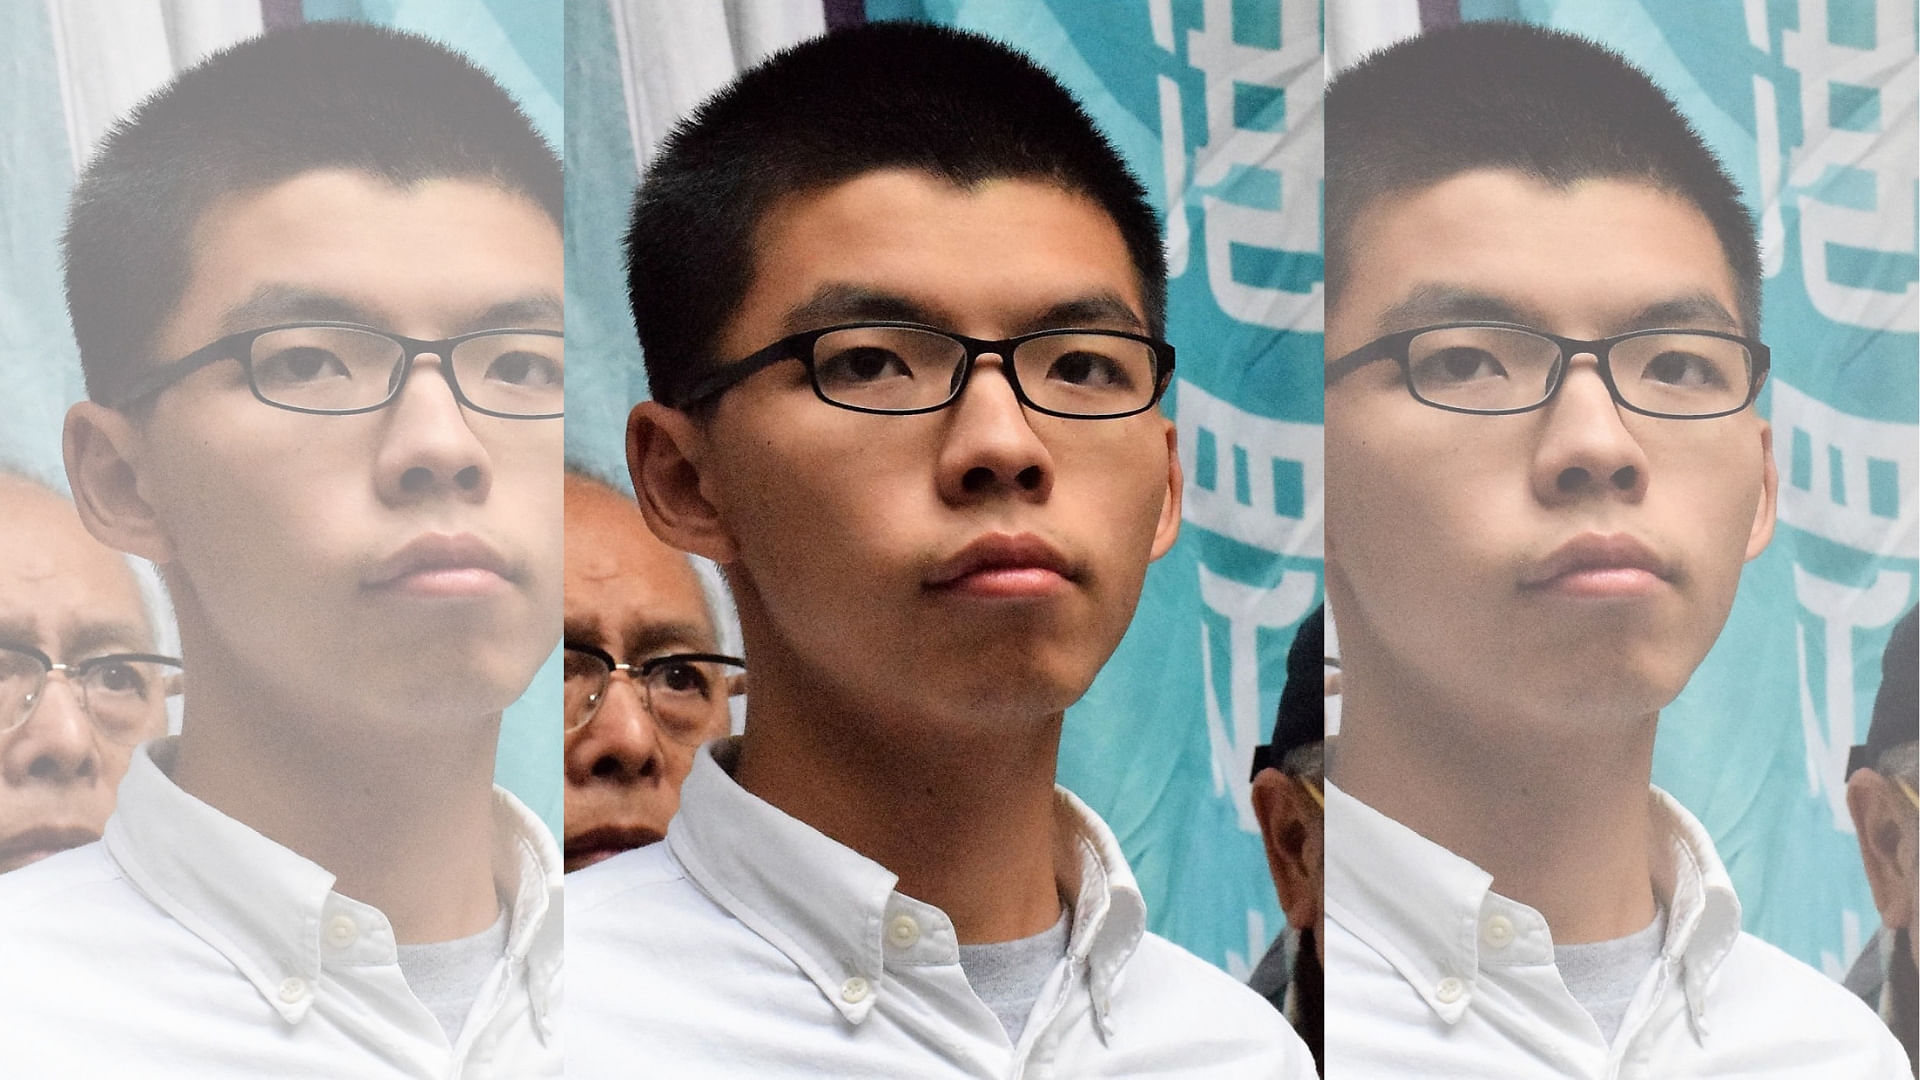 File image of democracy activist Joshua Wong.&nbsp;